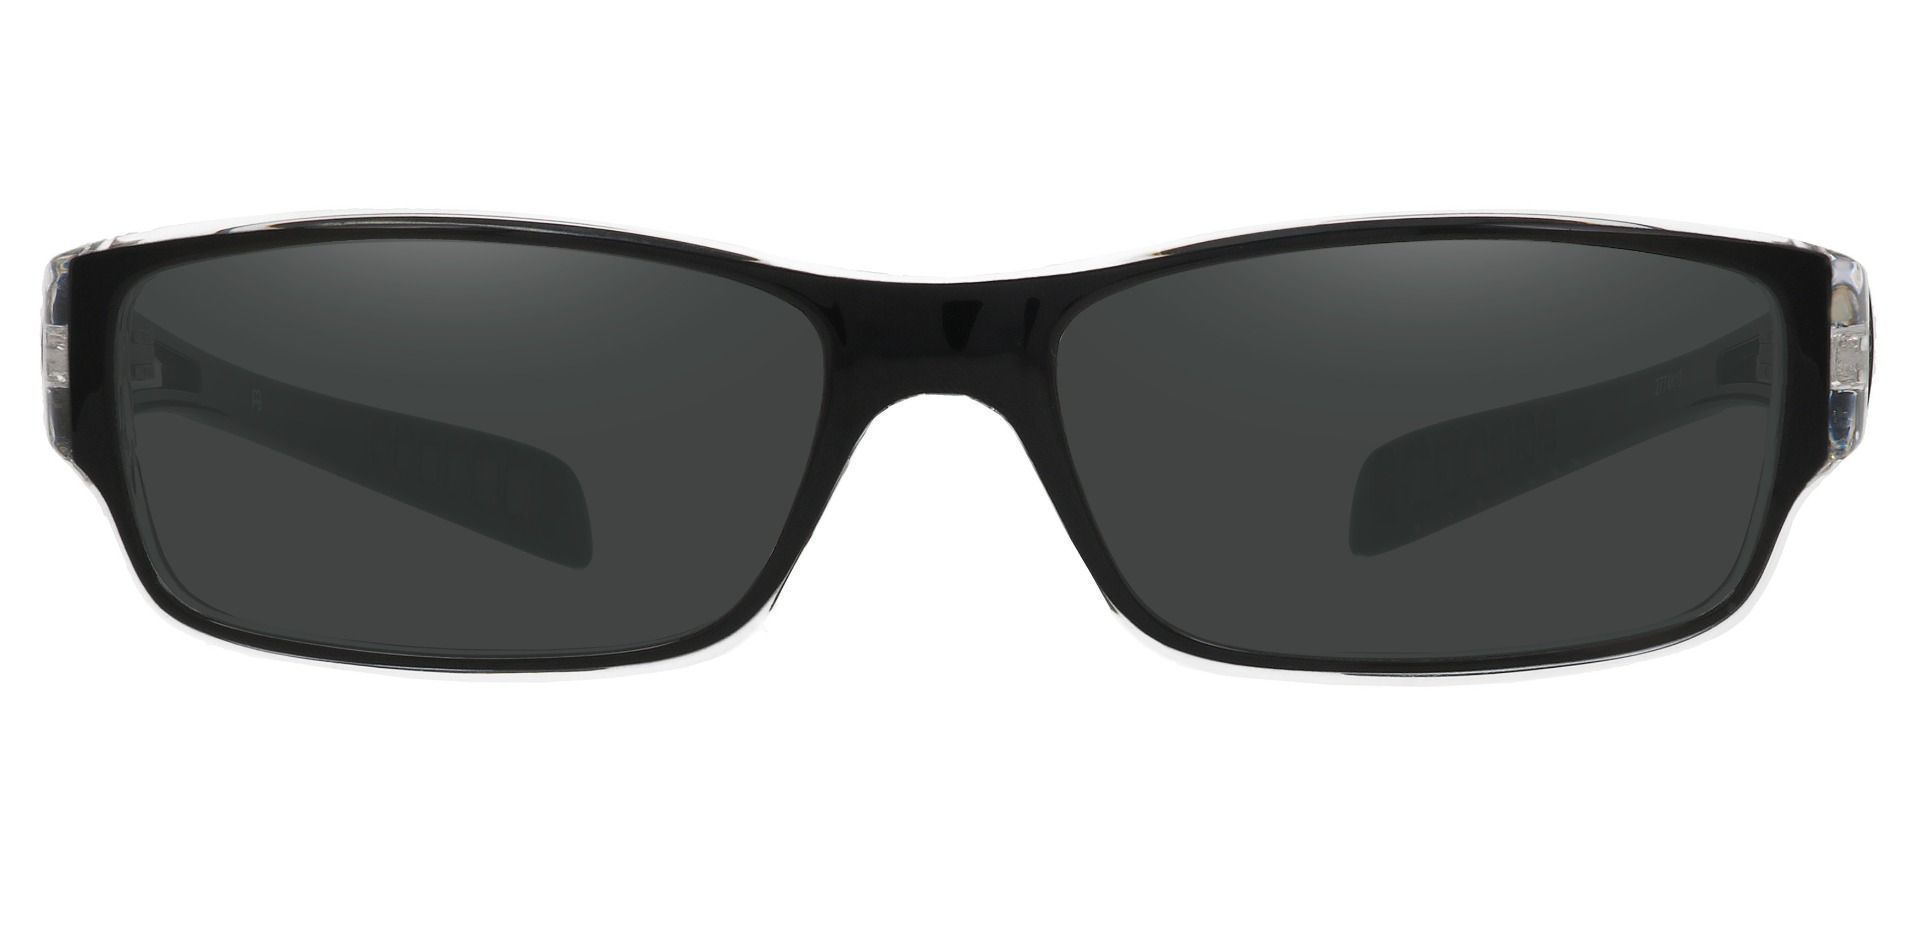 Mercury Rectangle Prescription Sunglasses - Black Frame With Gray Lenses